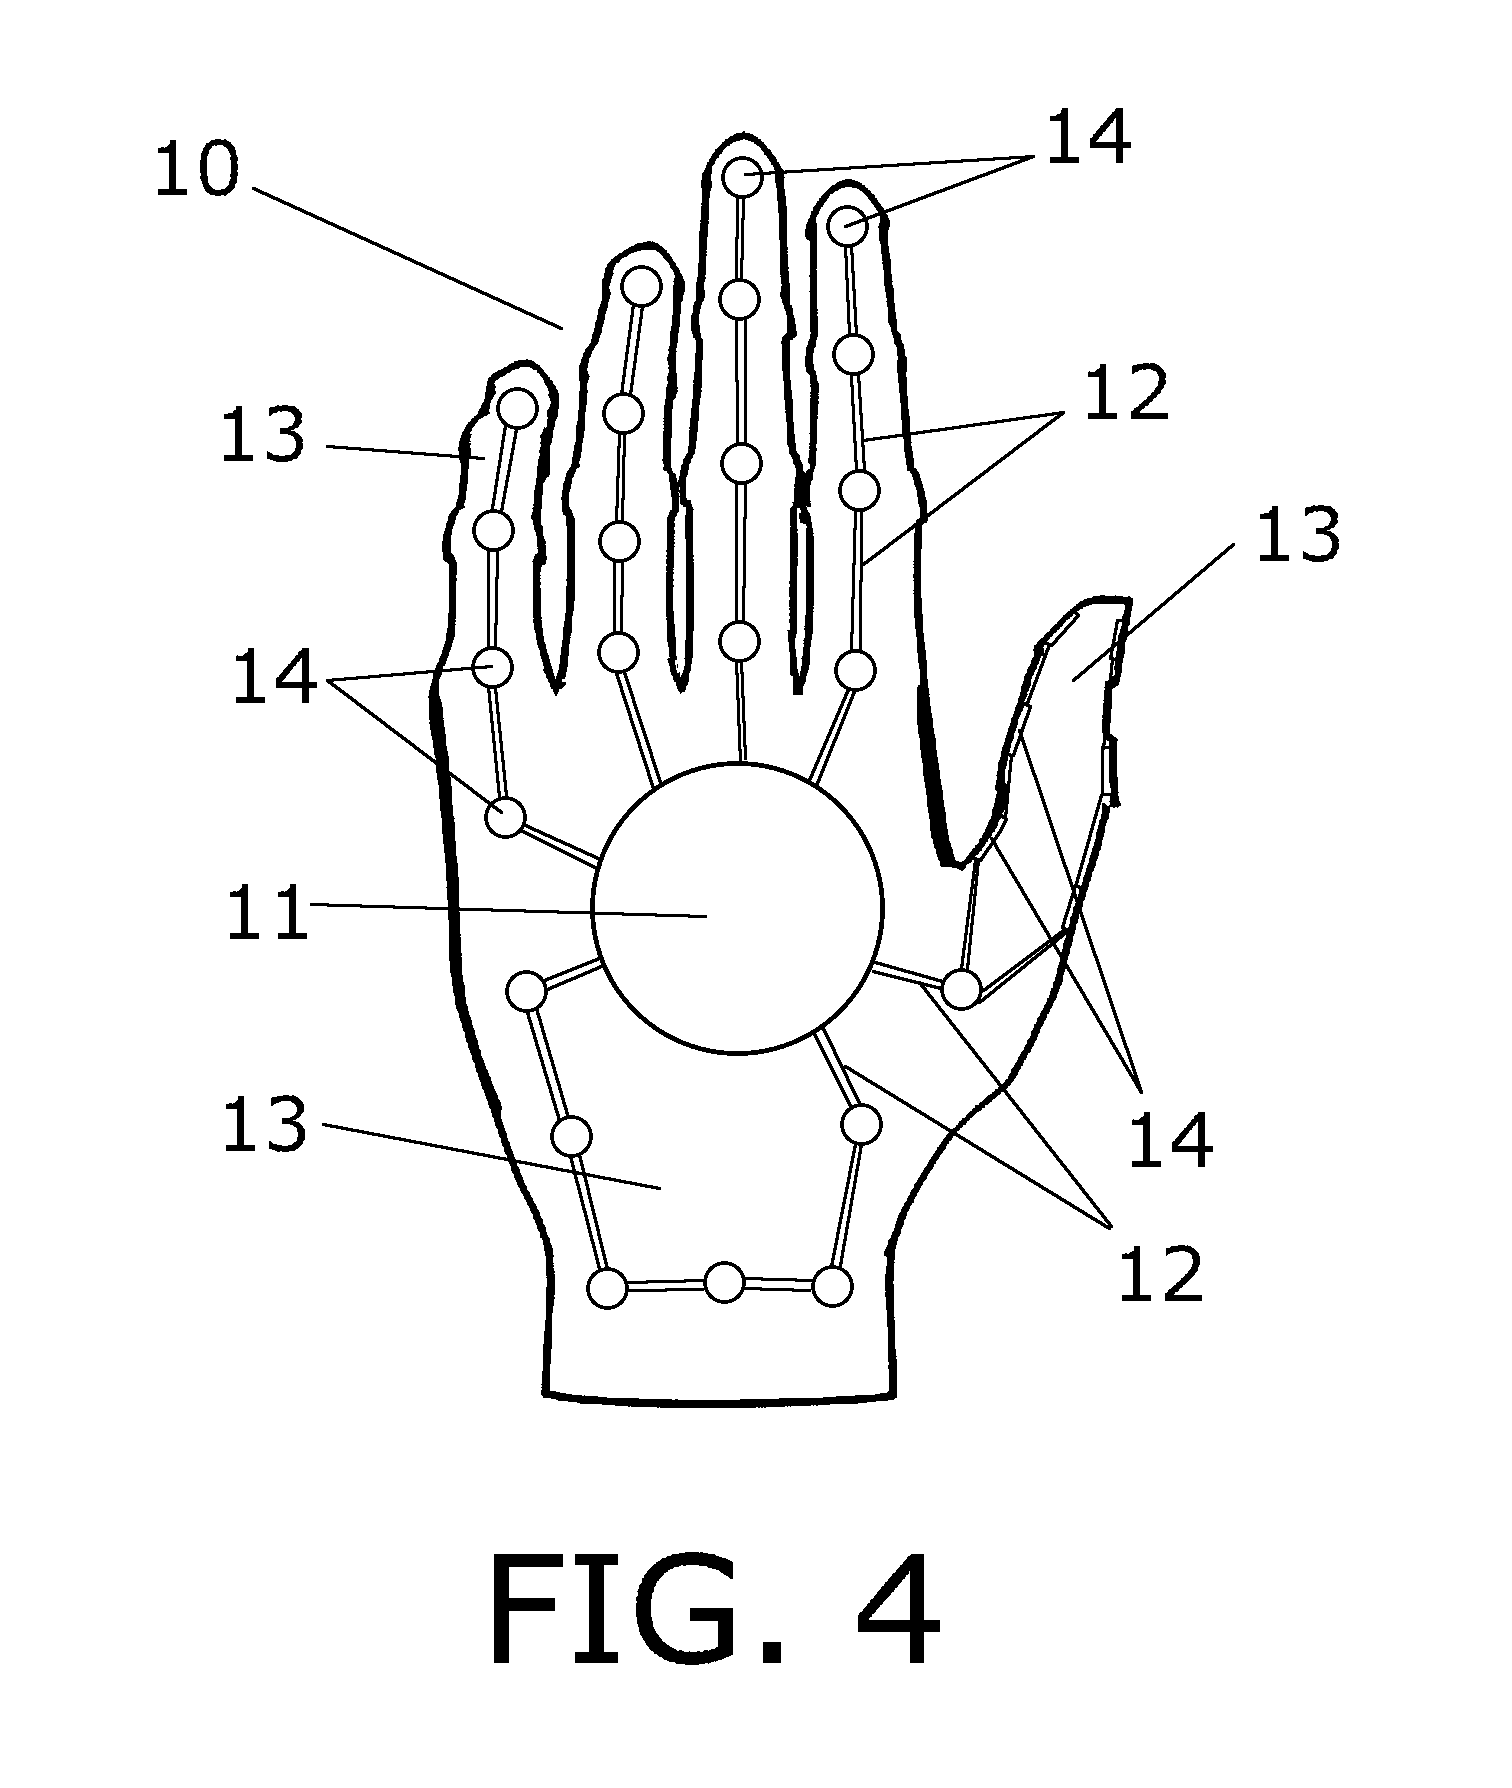 Medical Glove for Electric Stimulation